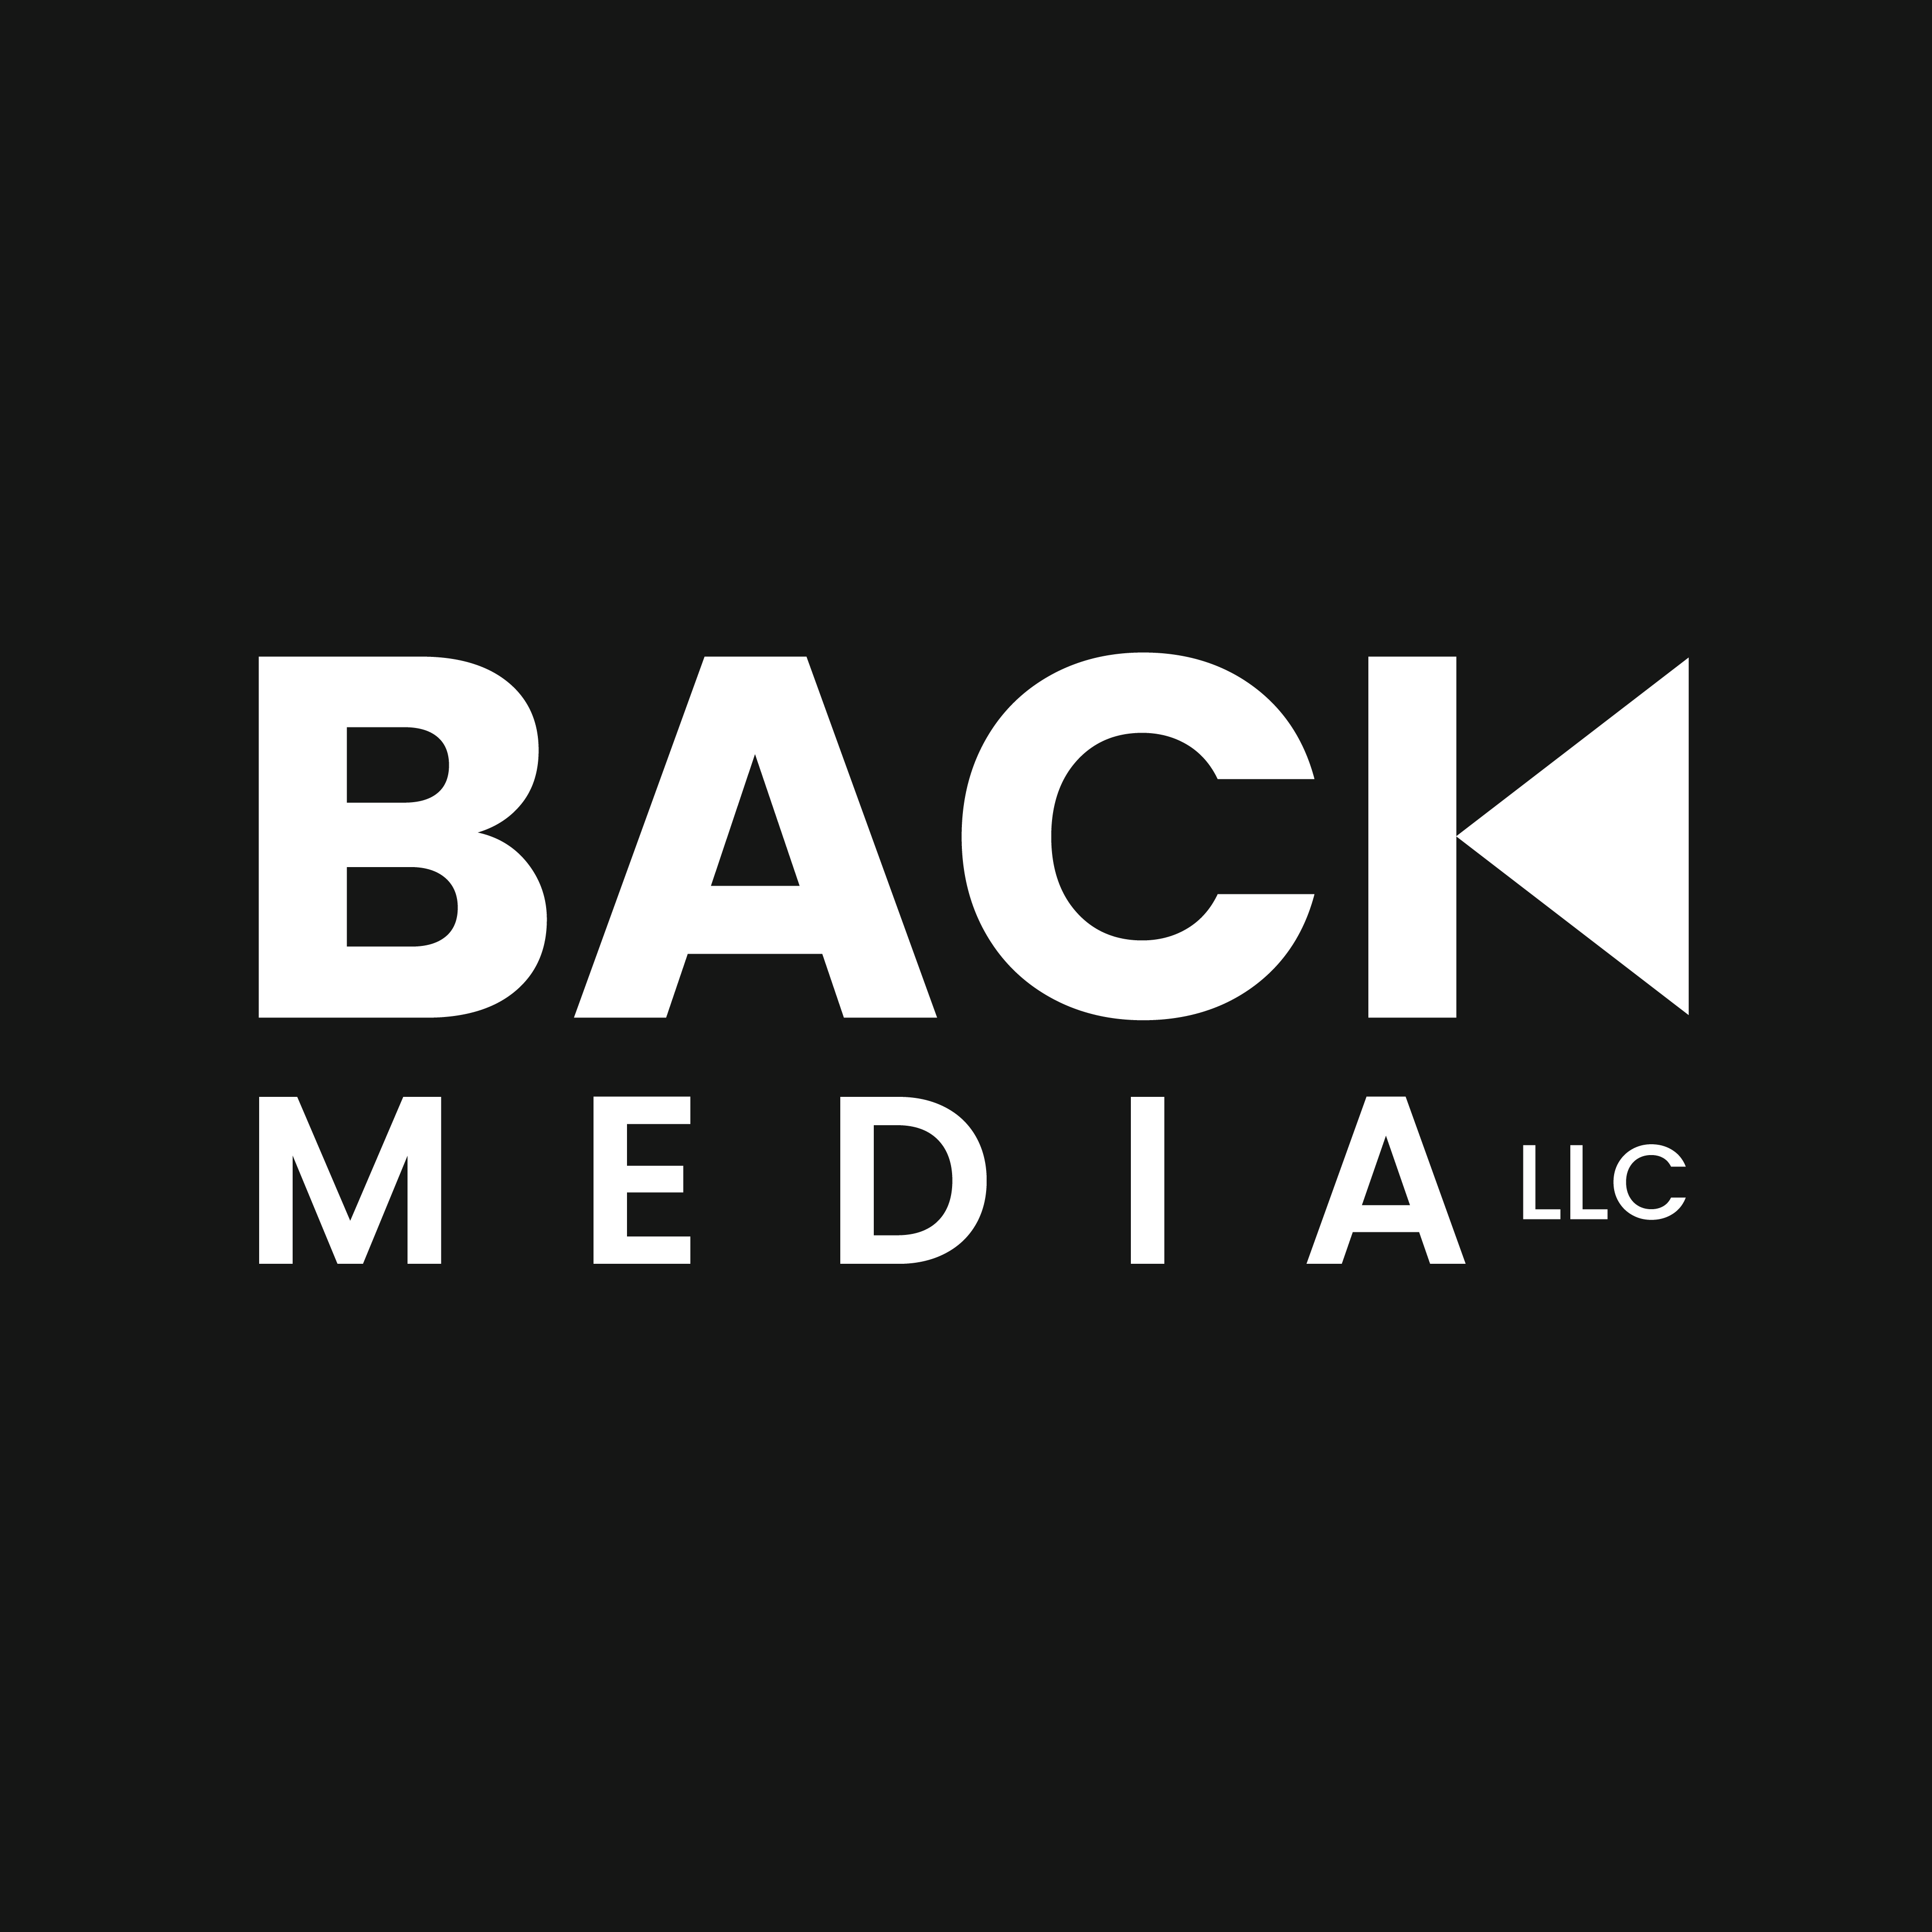 back media logo design by logo designer logorilla for your inspiration and for the worlds largest logo competition